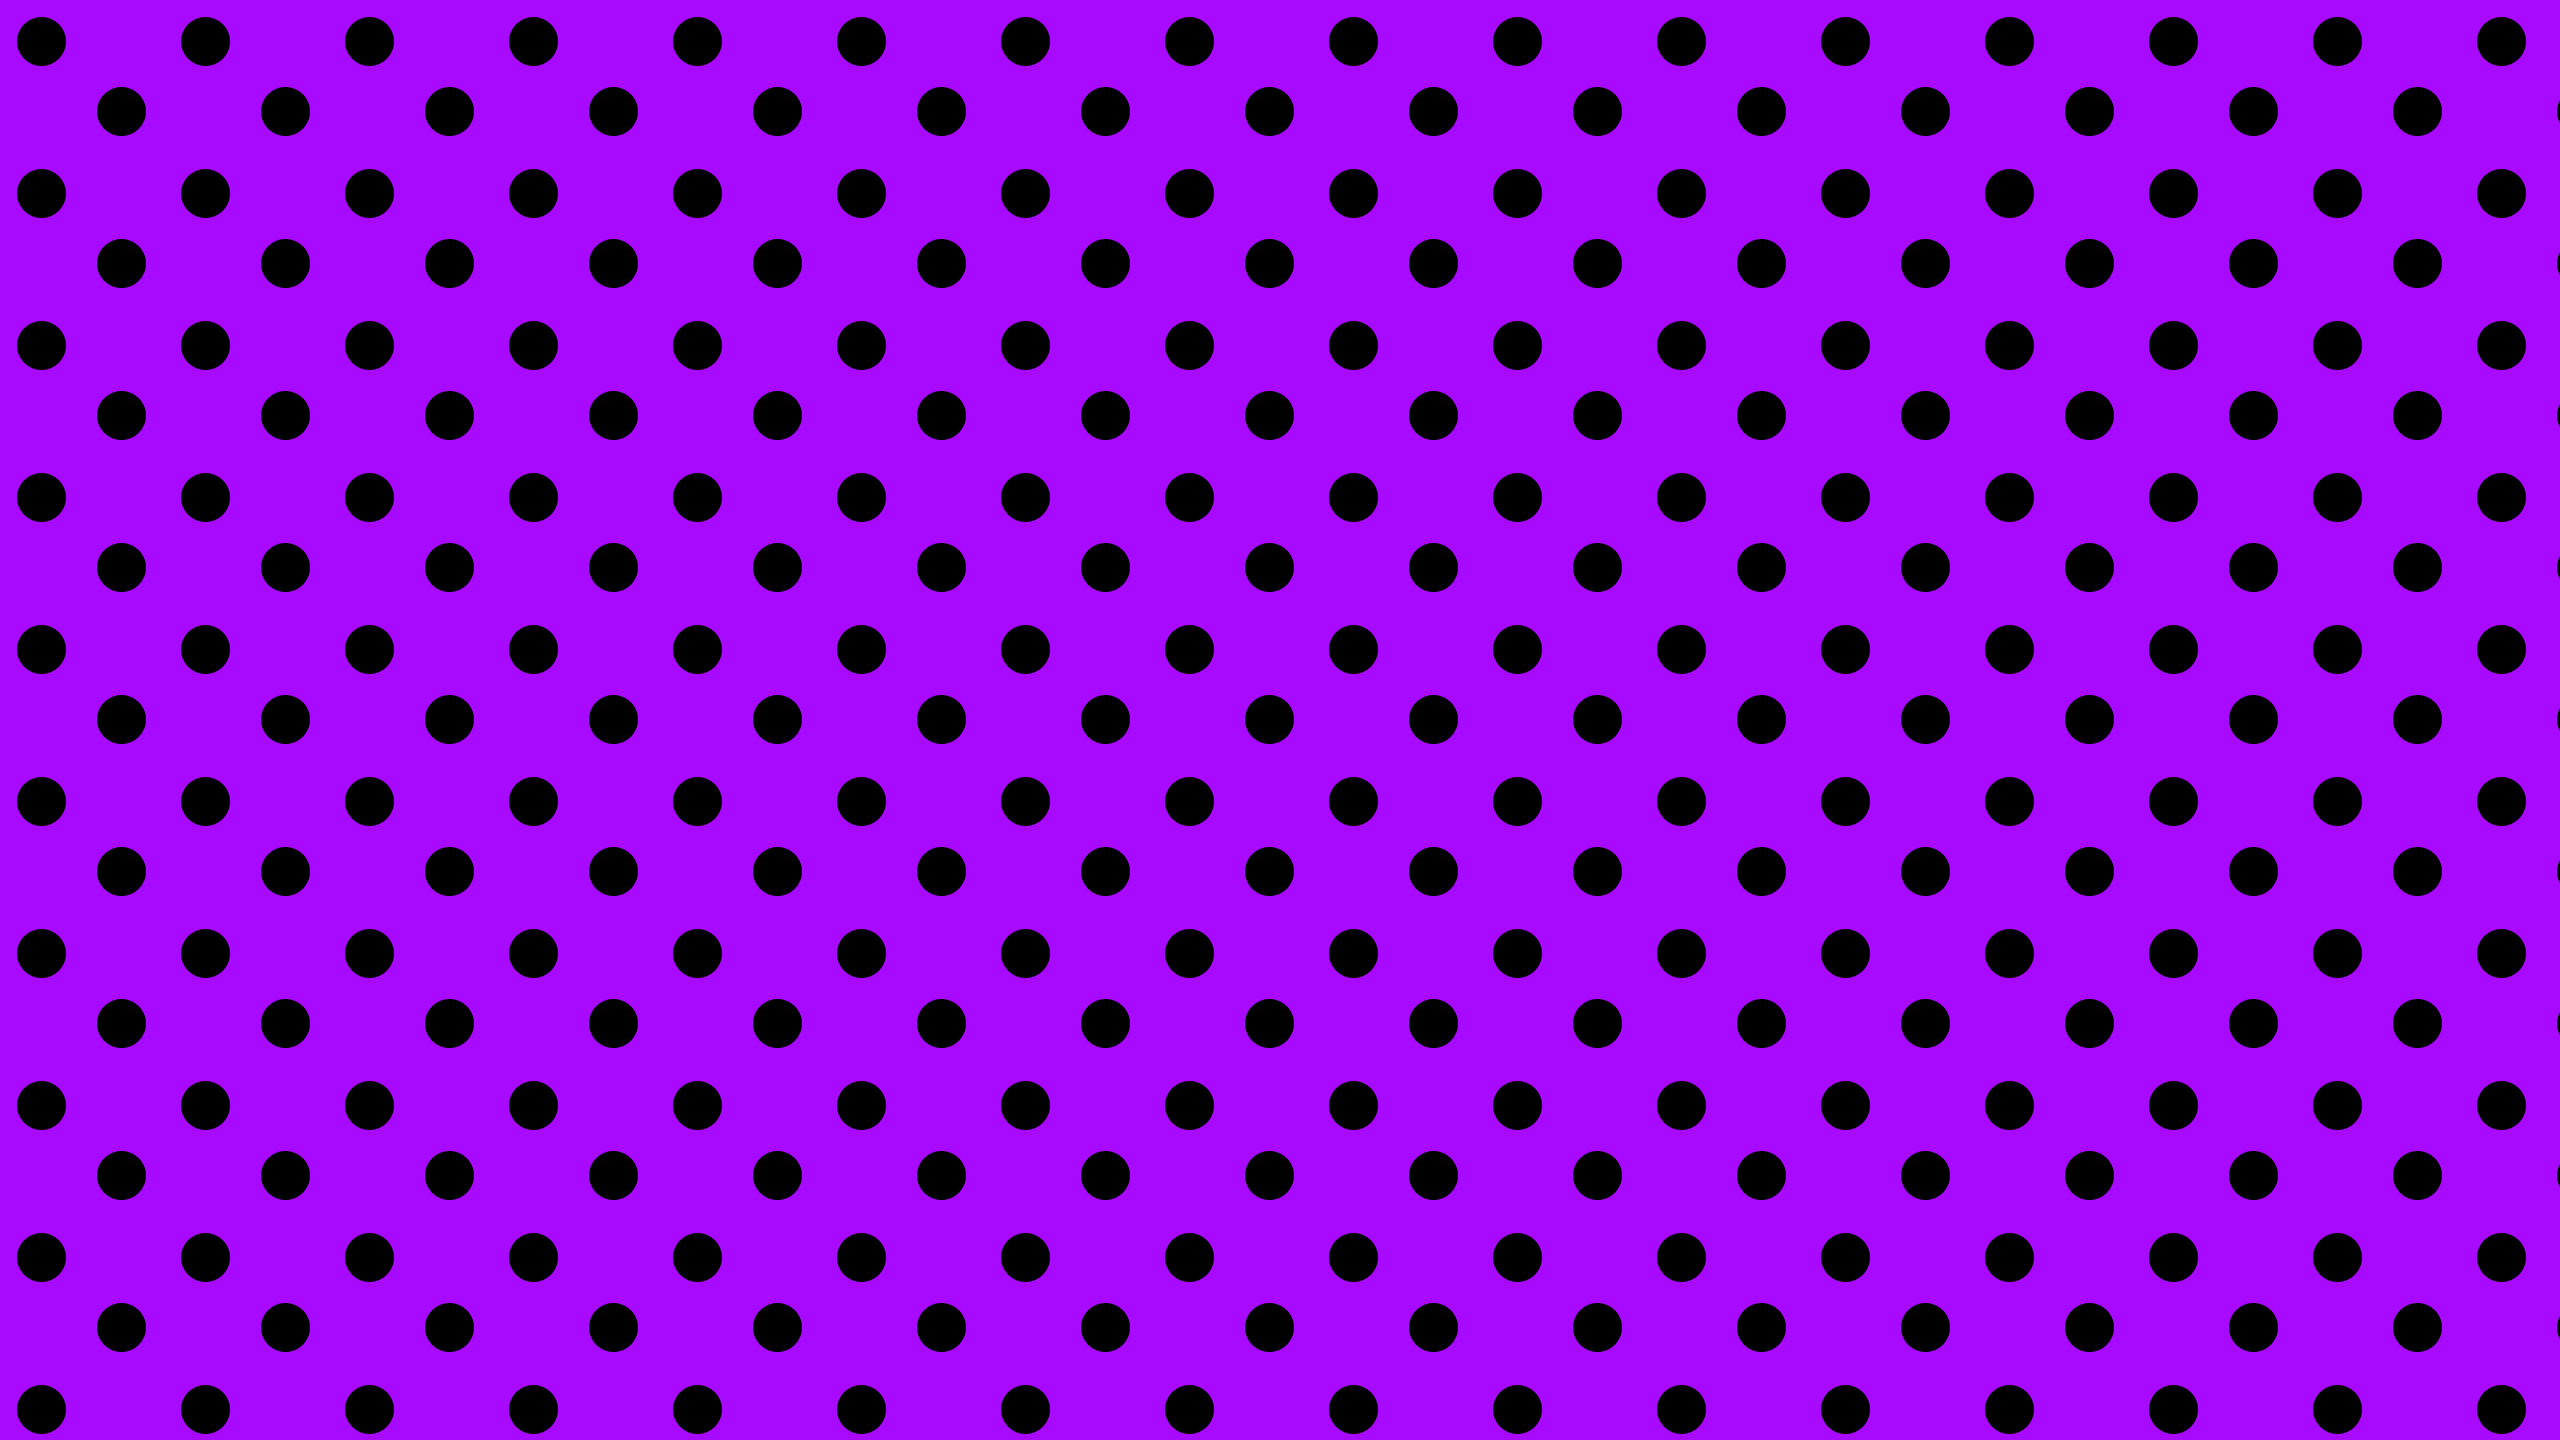 Large Purple Black Desktop Wallpaper is easy Just save the wallpaper